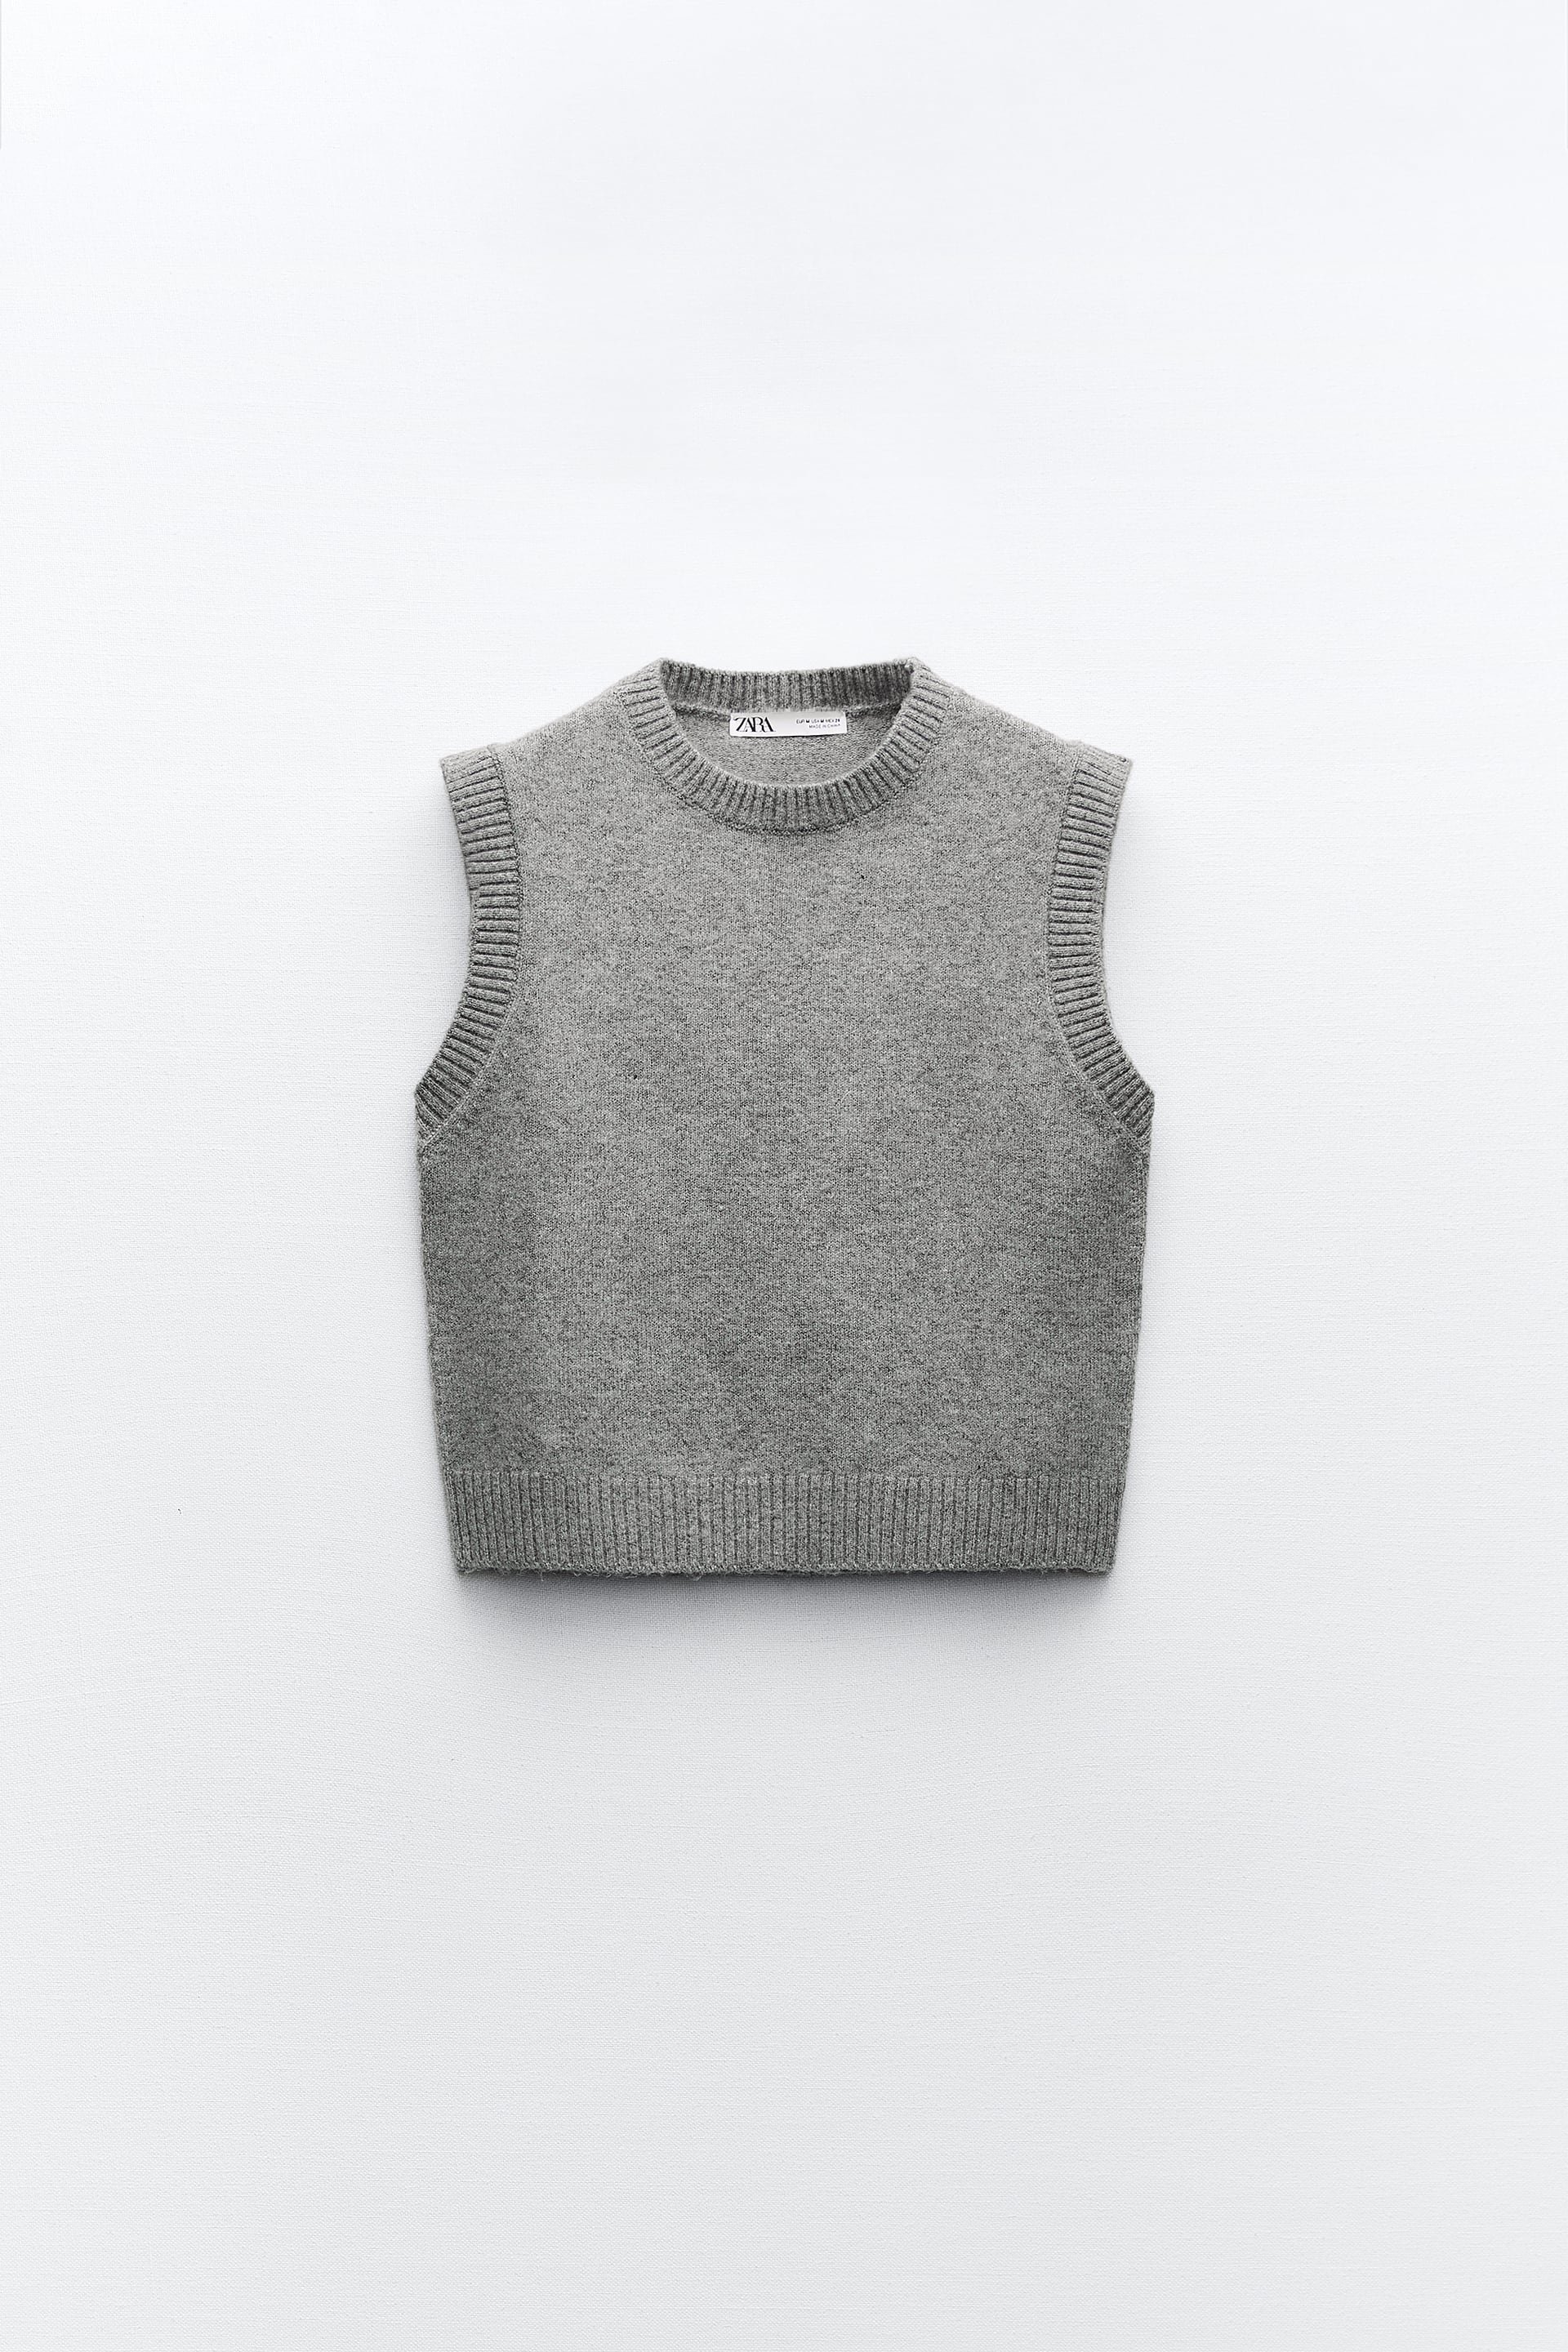 Zara Soft Knit Vest in Grey Marl.jpg